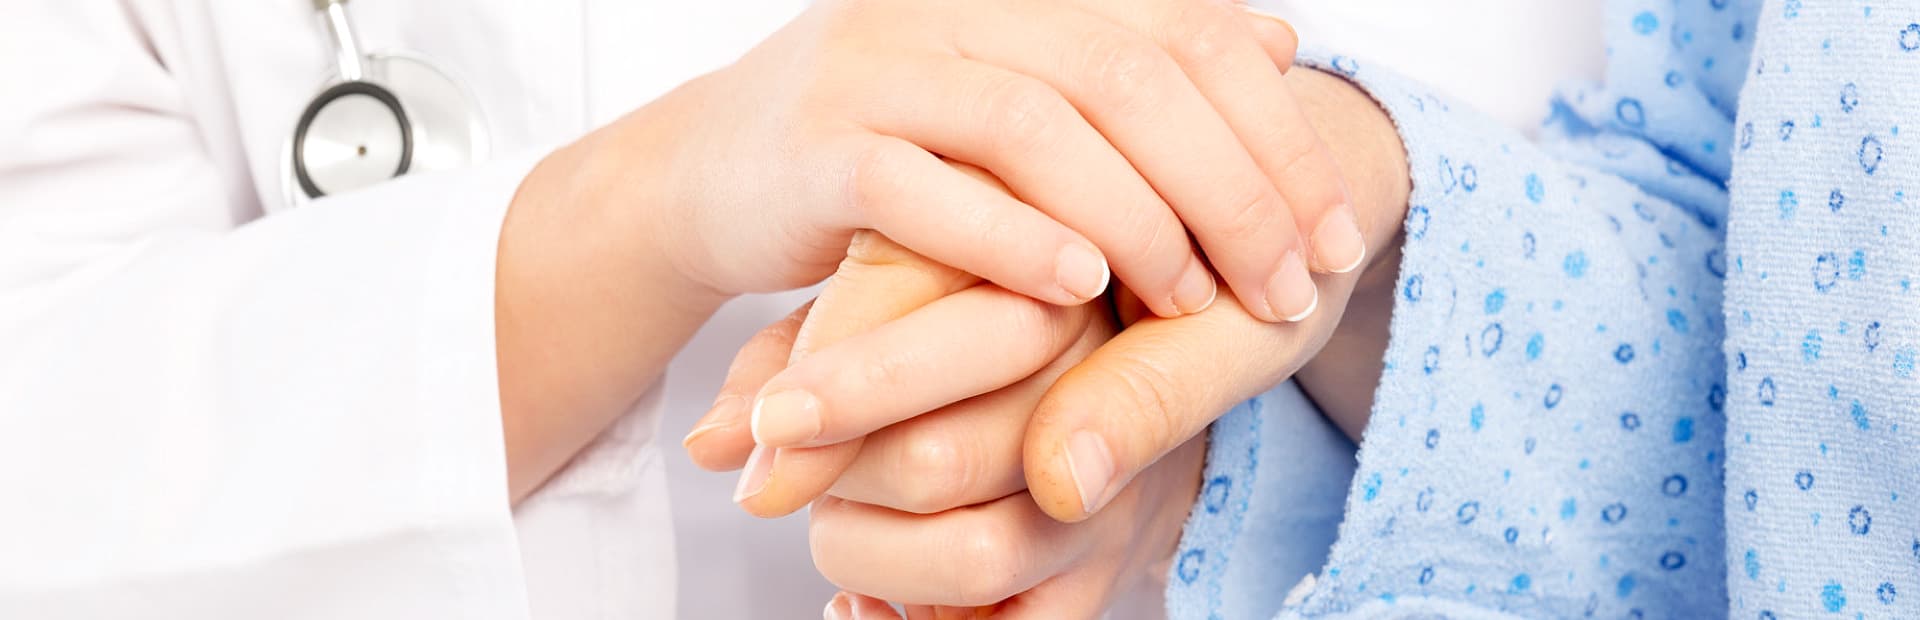 elder and caregiver hand in hand